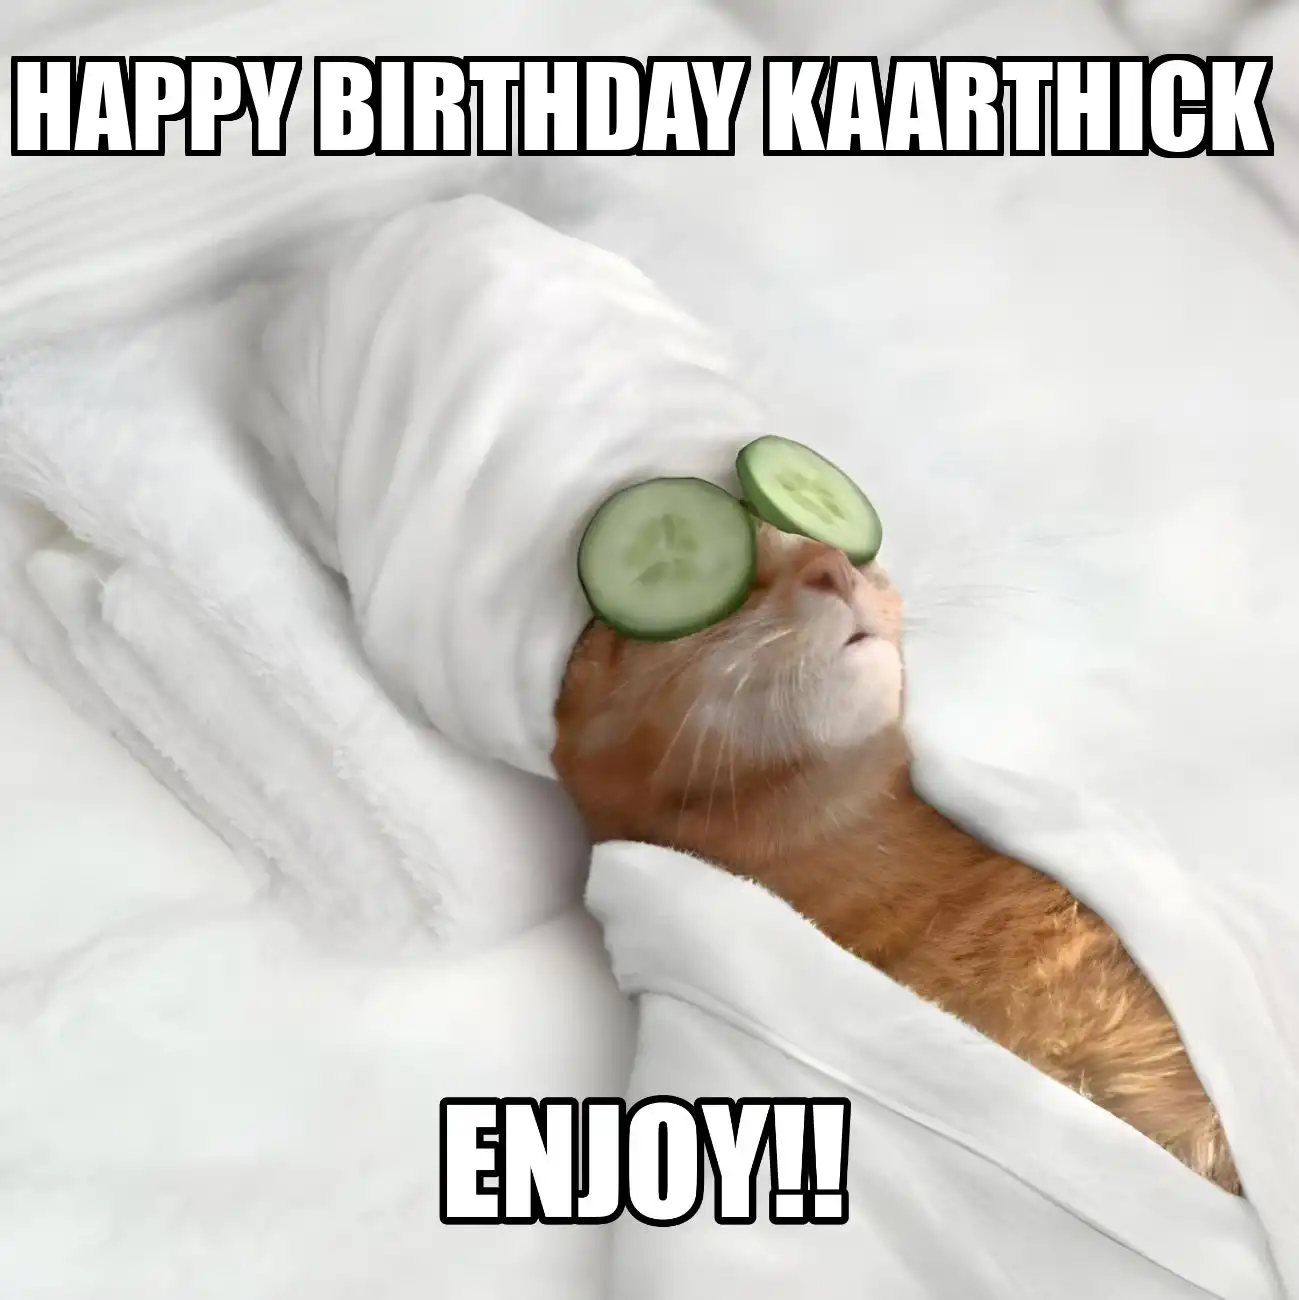 Happy Birthday Kaarthick Enjoy Cat Meme